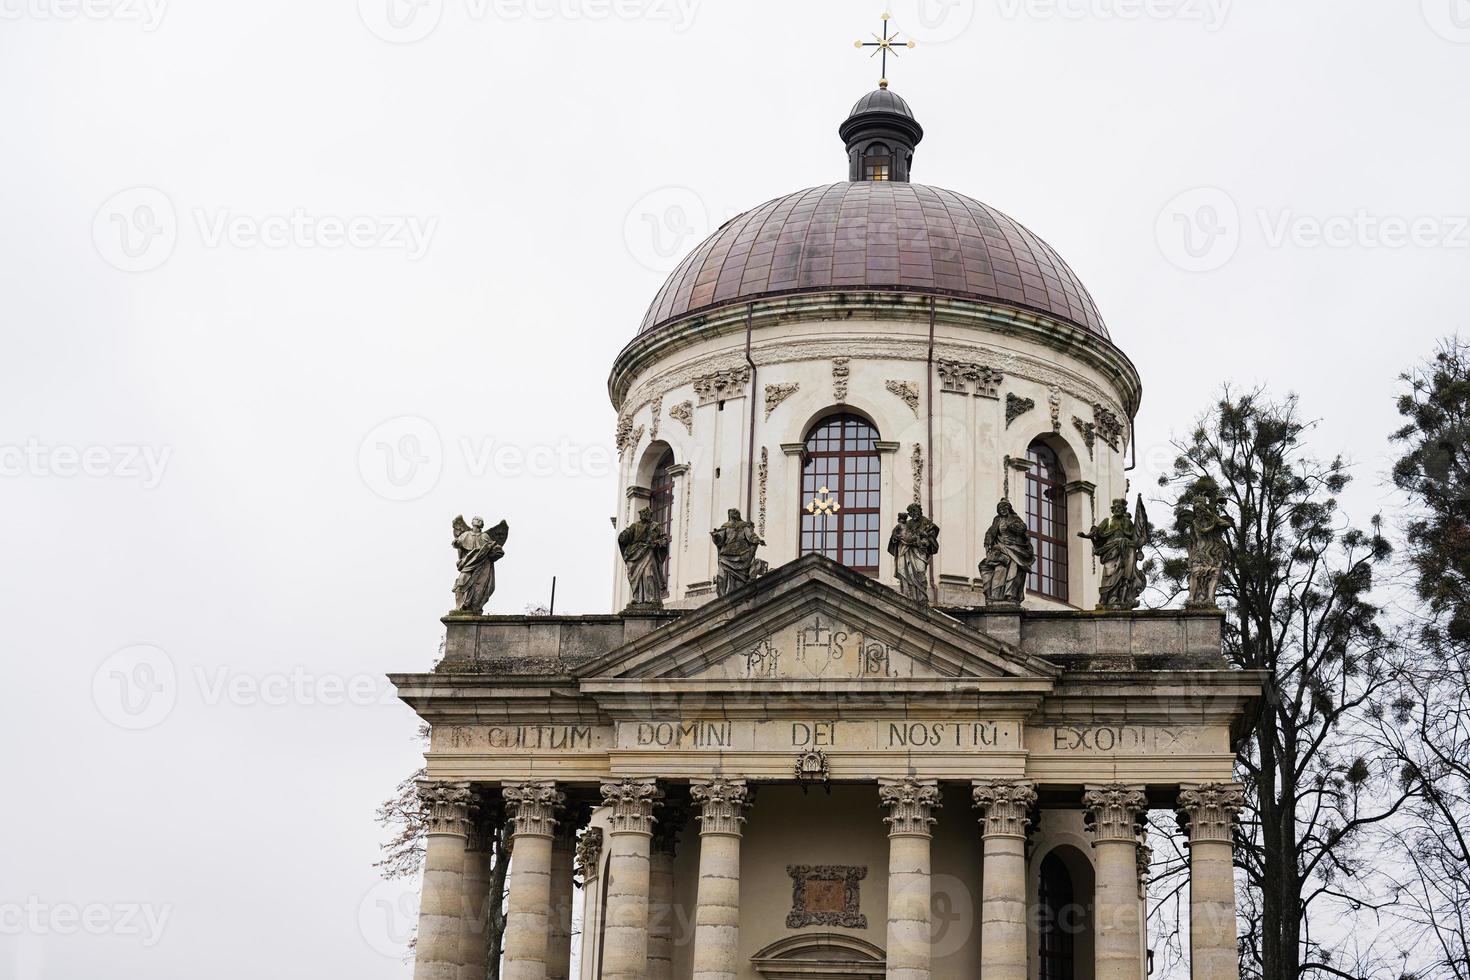 Baroque Roman Catholic church of St. Joseph mid 18th century. Latin on main facade - TO THE GLORY OF OUR LORD GOD, Pidhirtsi, Lviv Oblast, Ukraine. photo